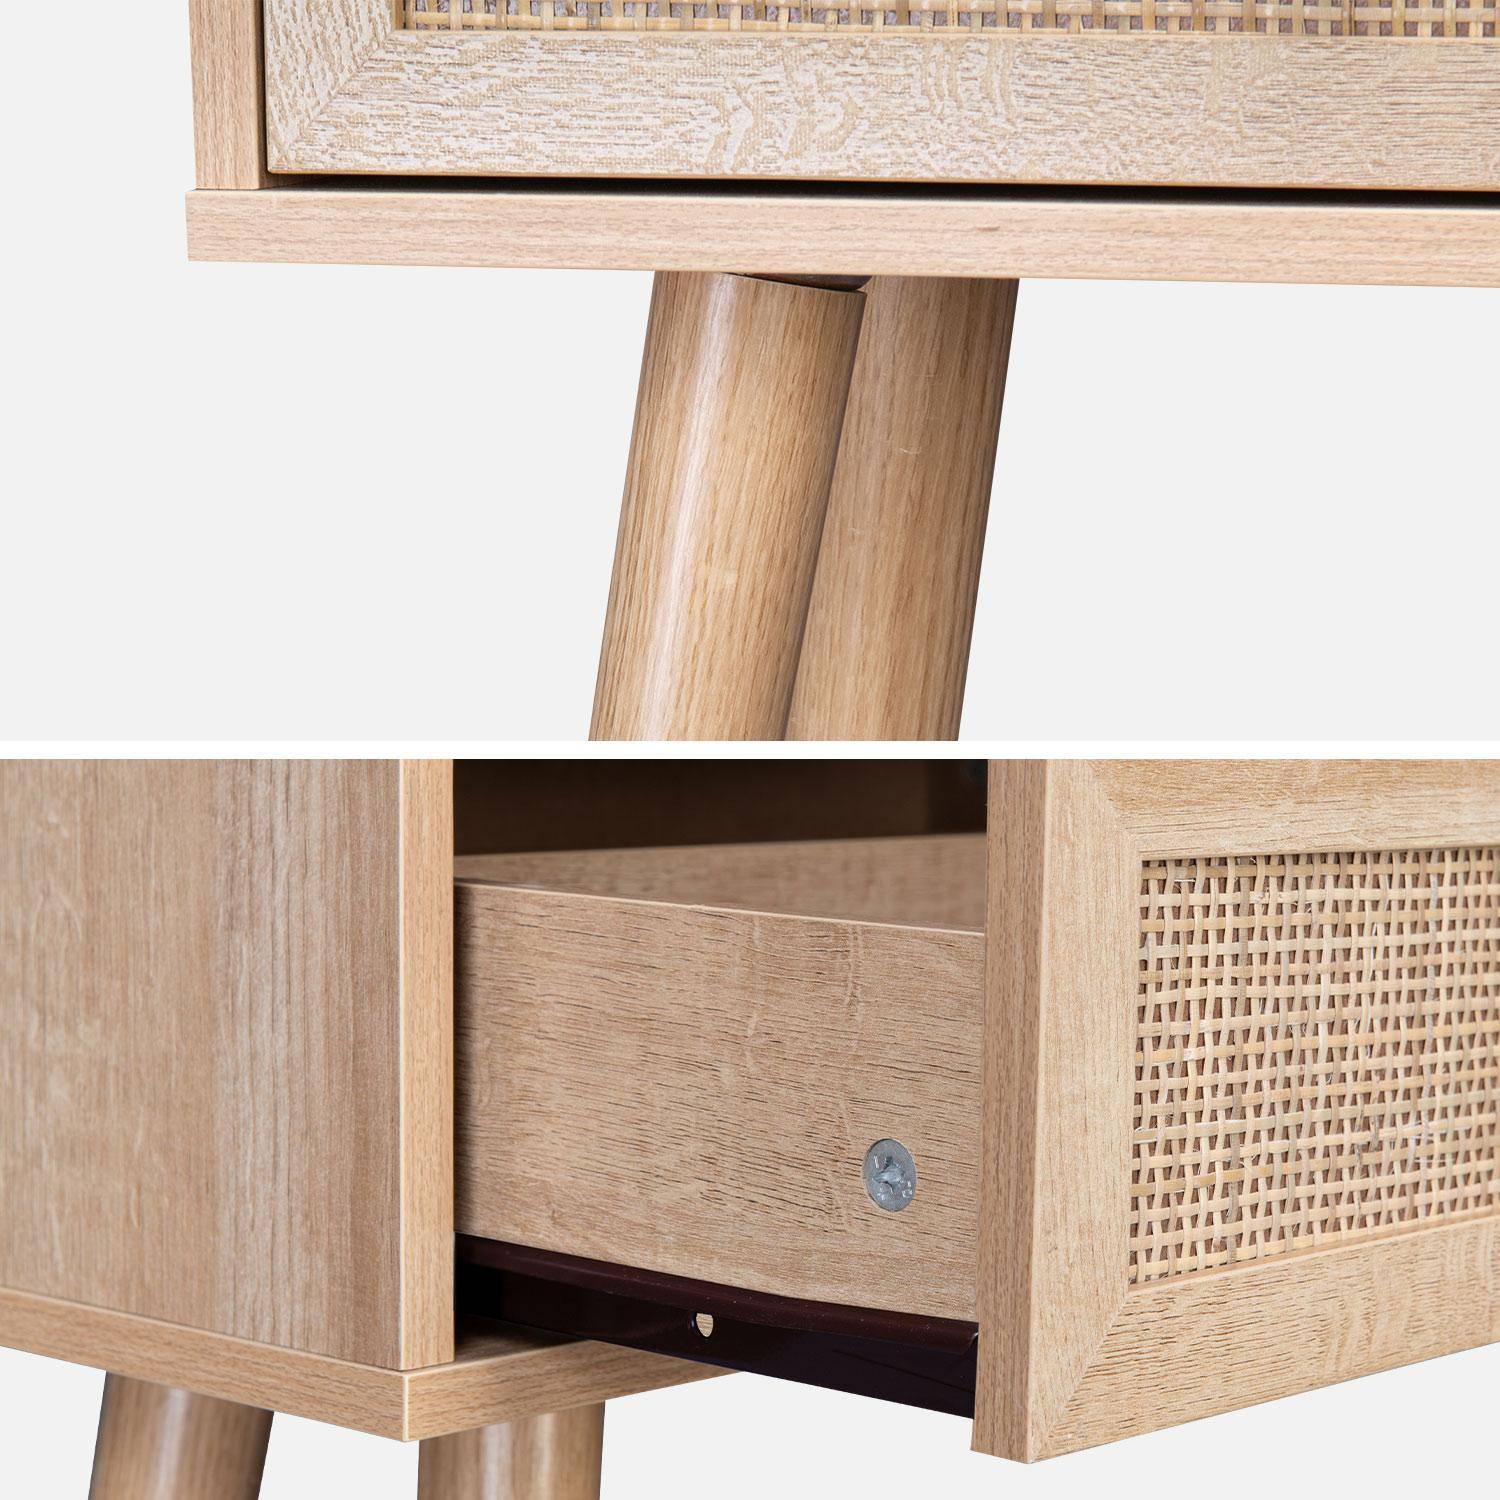 Wood and cane rattan Scandi-style console table, 100x30x81cm - Boheme - Natural wood colour Photo5